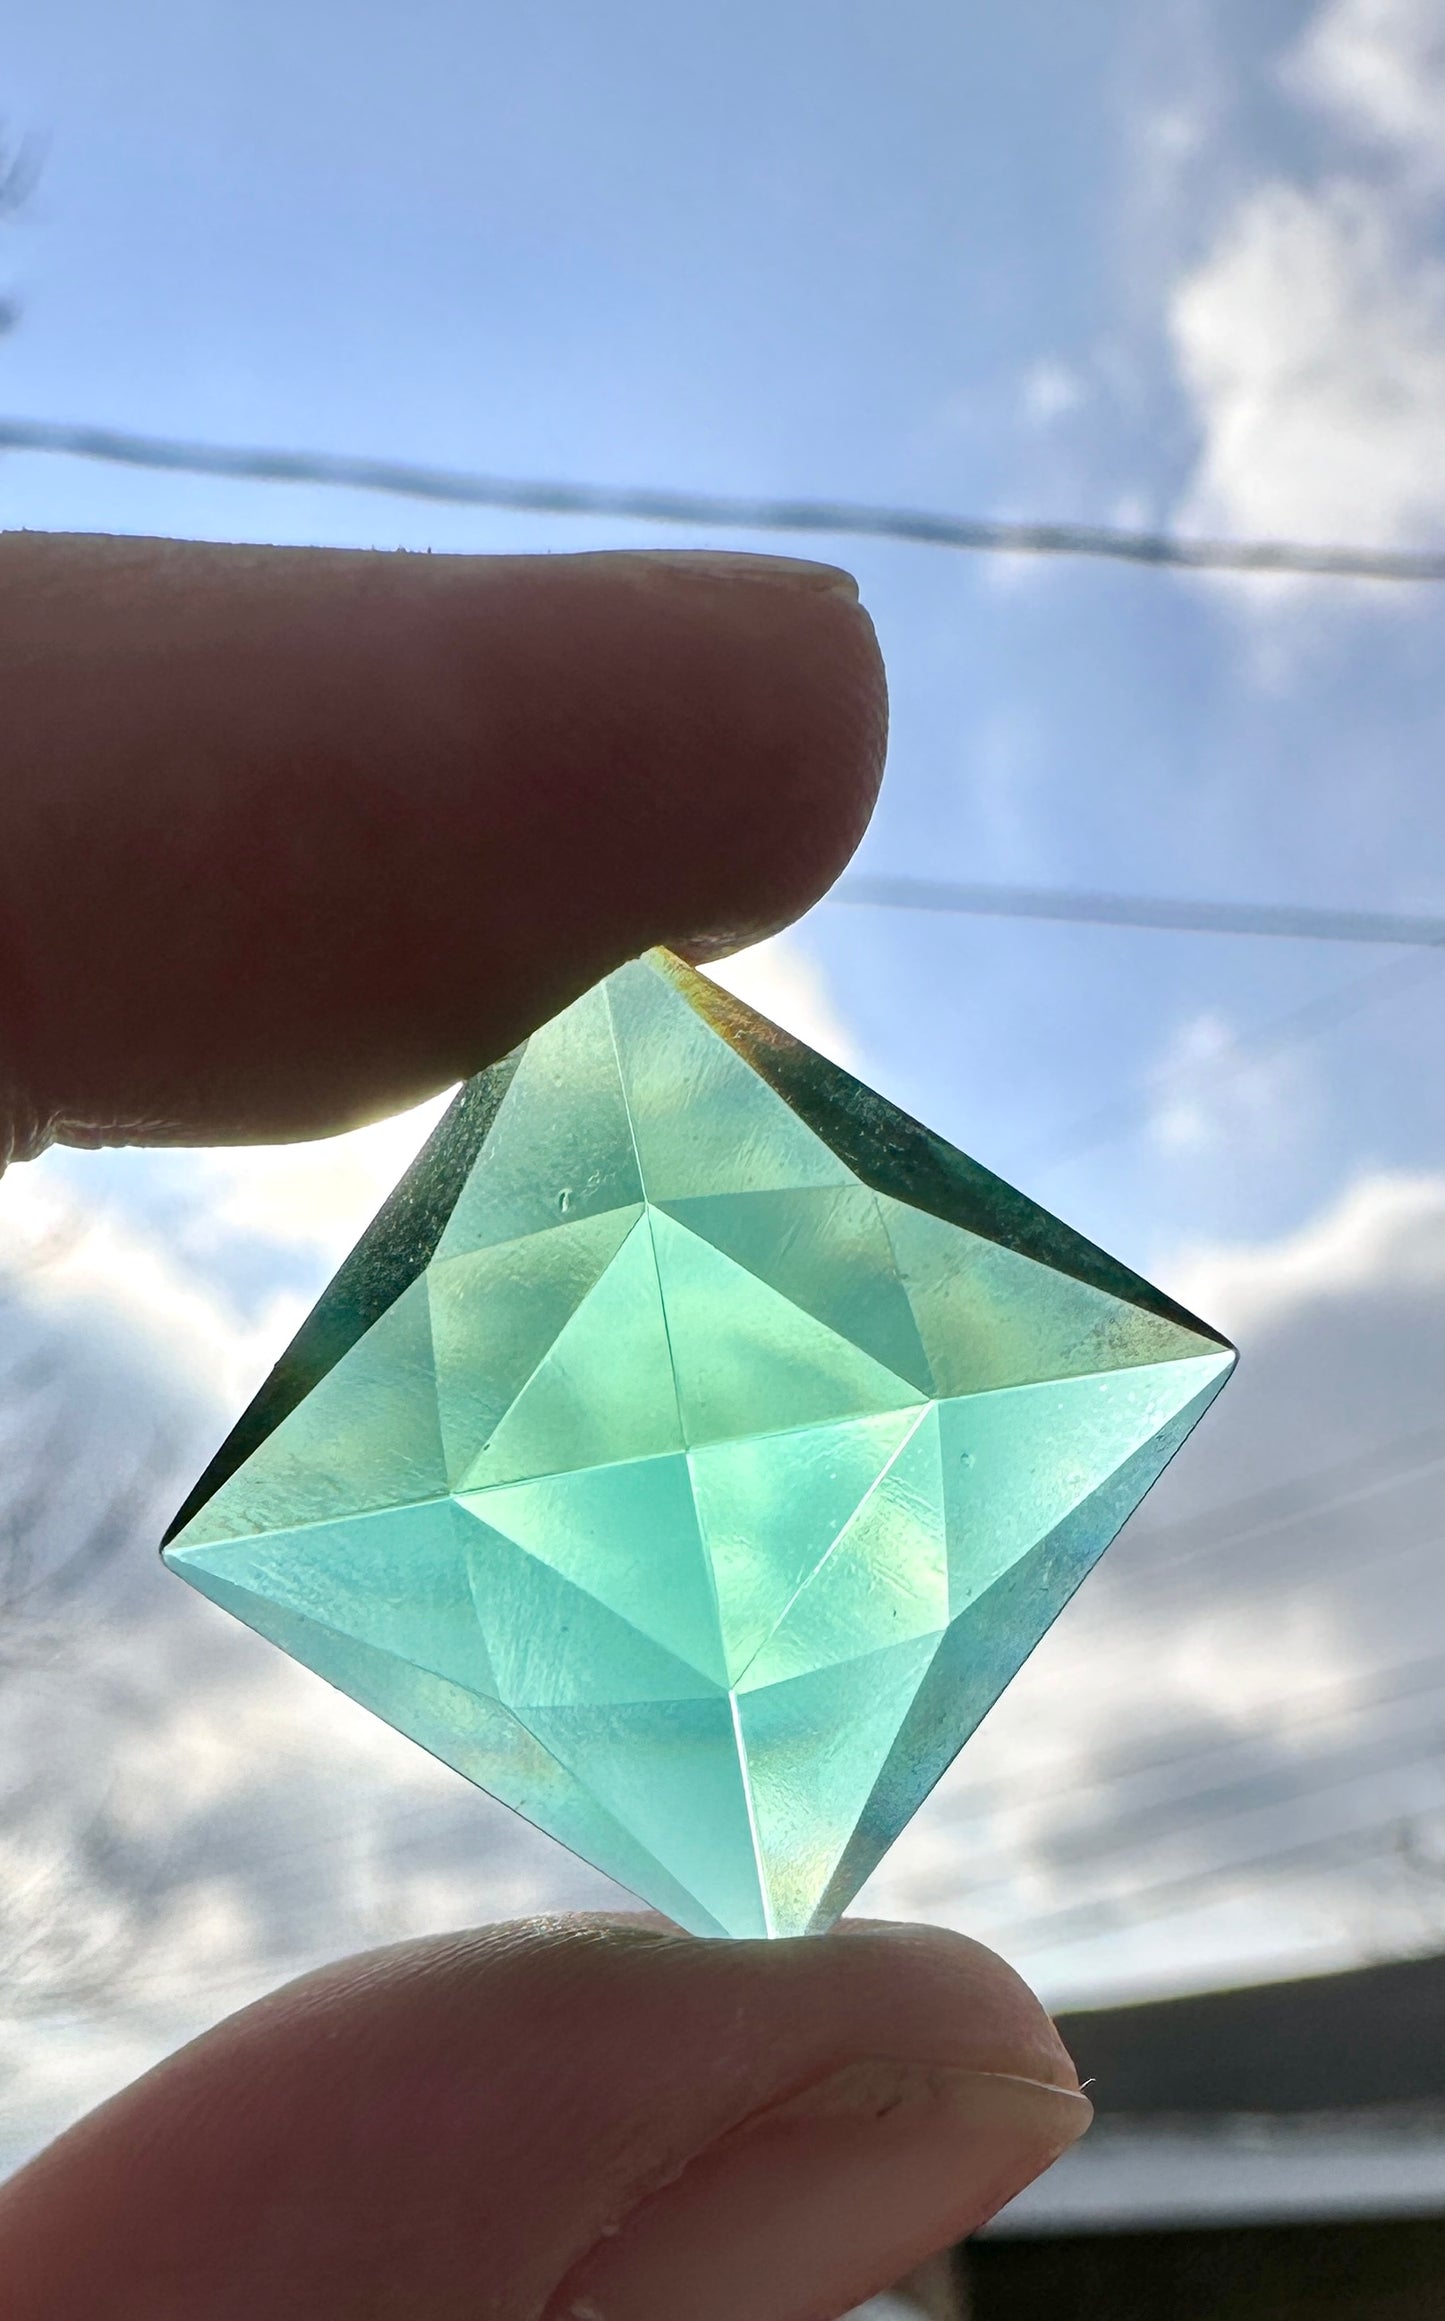 20x20mm Square High Faceted Uranium/Depression/Vaseline Green Glass Jewel - UV Reactive - Glows Under Blacklight